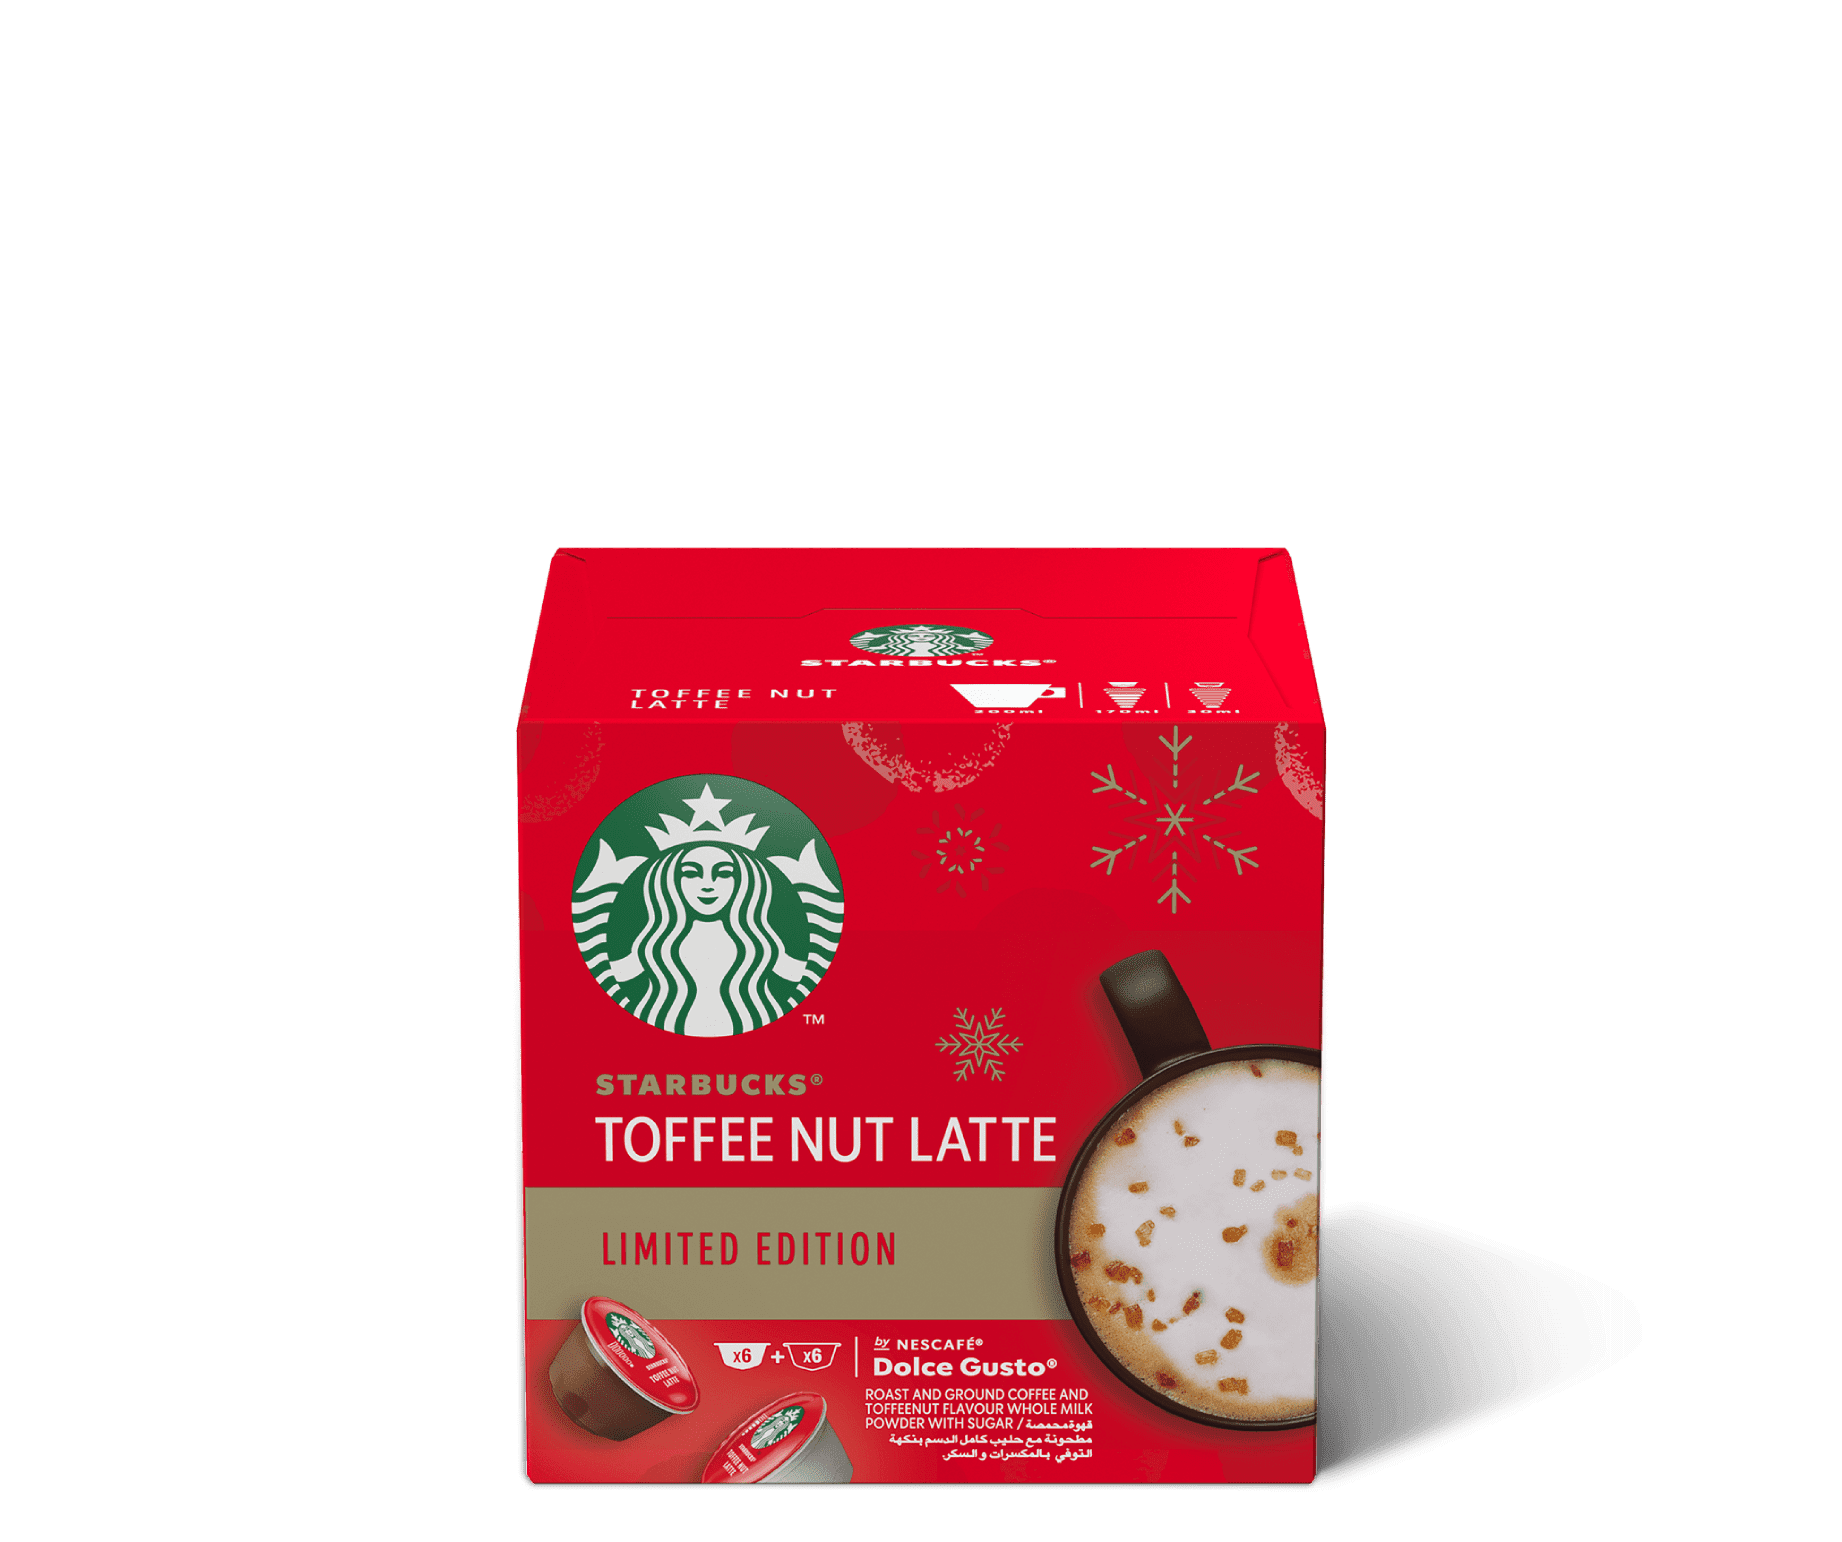 STARBUCKS® TOFFEE NUT LATTE BY NESCAFÉ® DOLCE GUSTO®